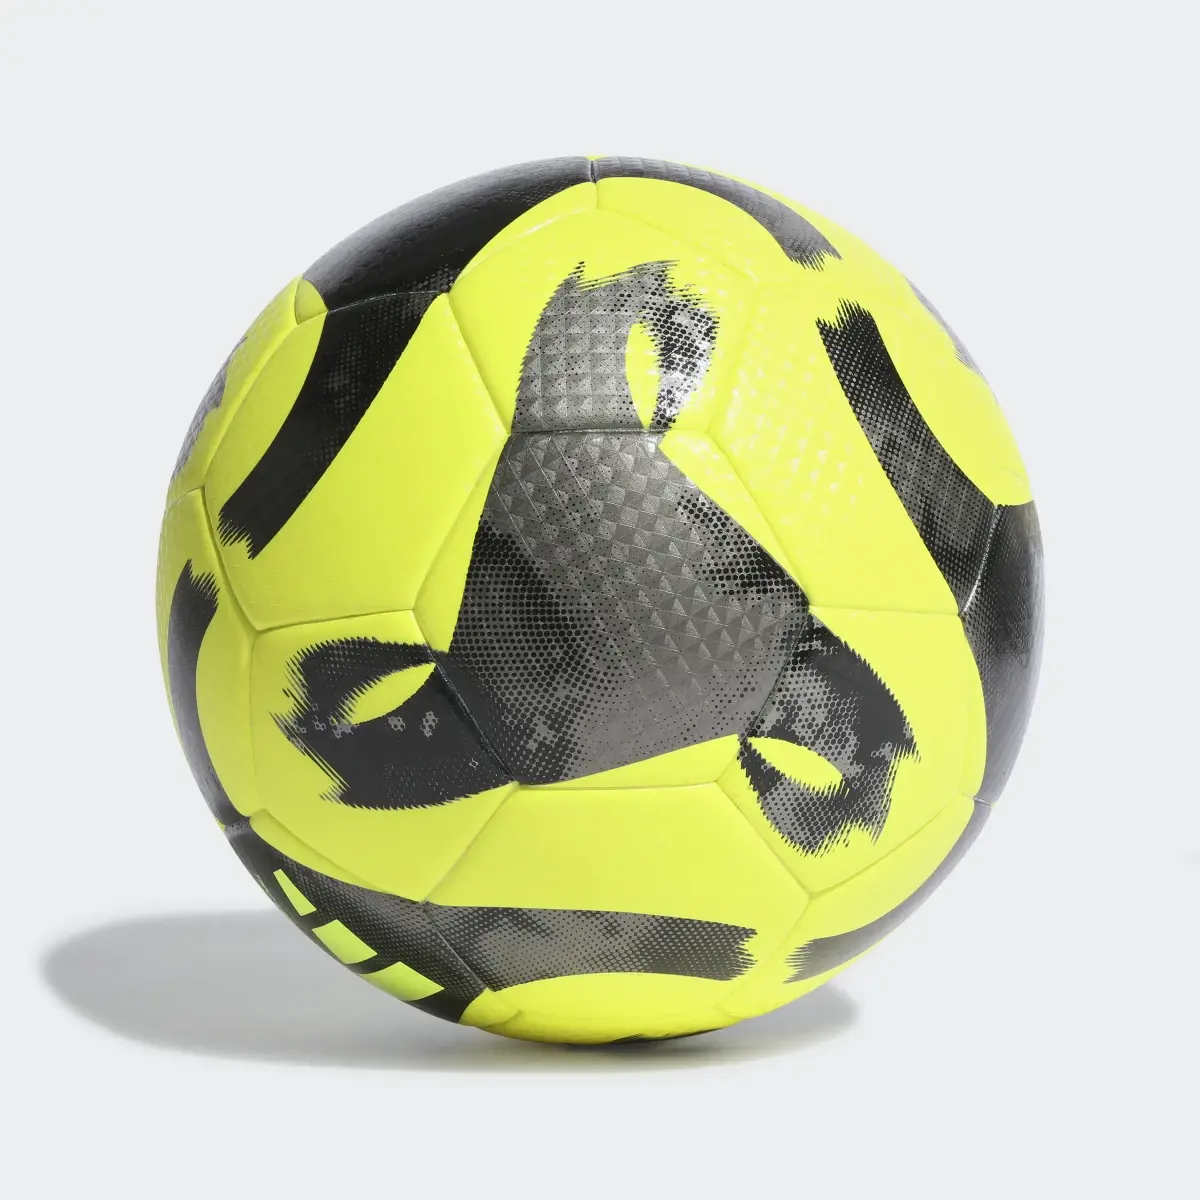 Adidas Tiro League Thermally Bonded Football. 3